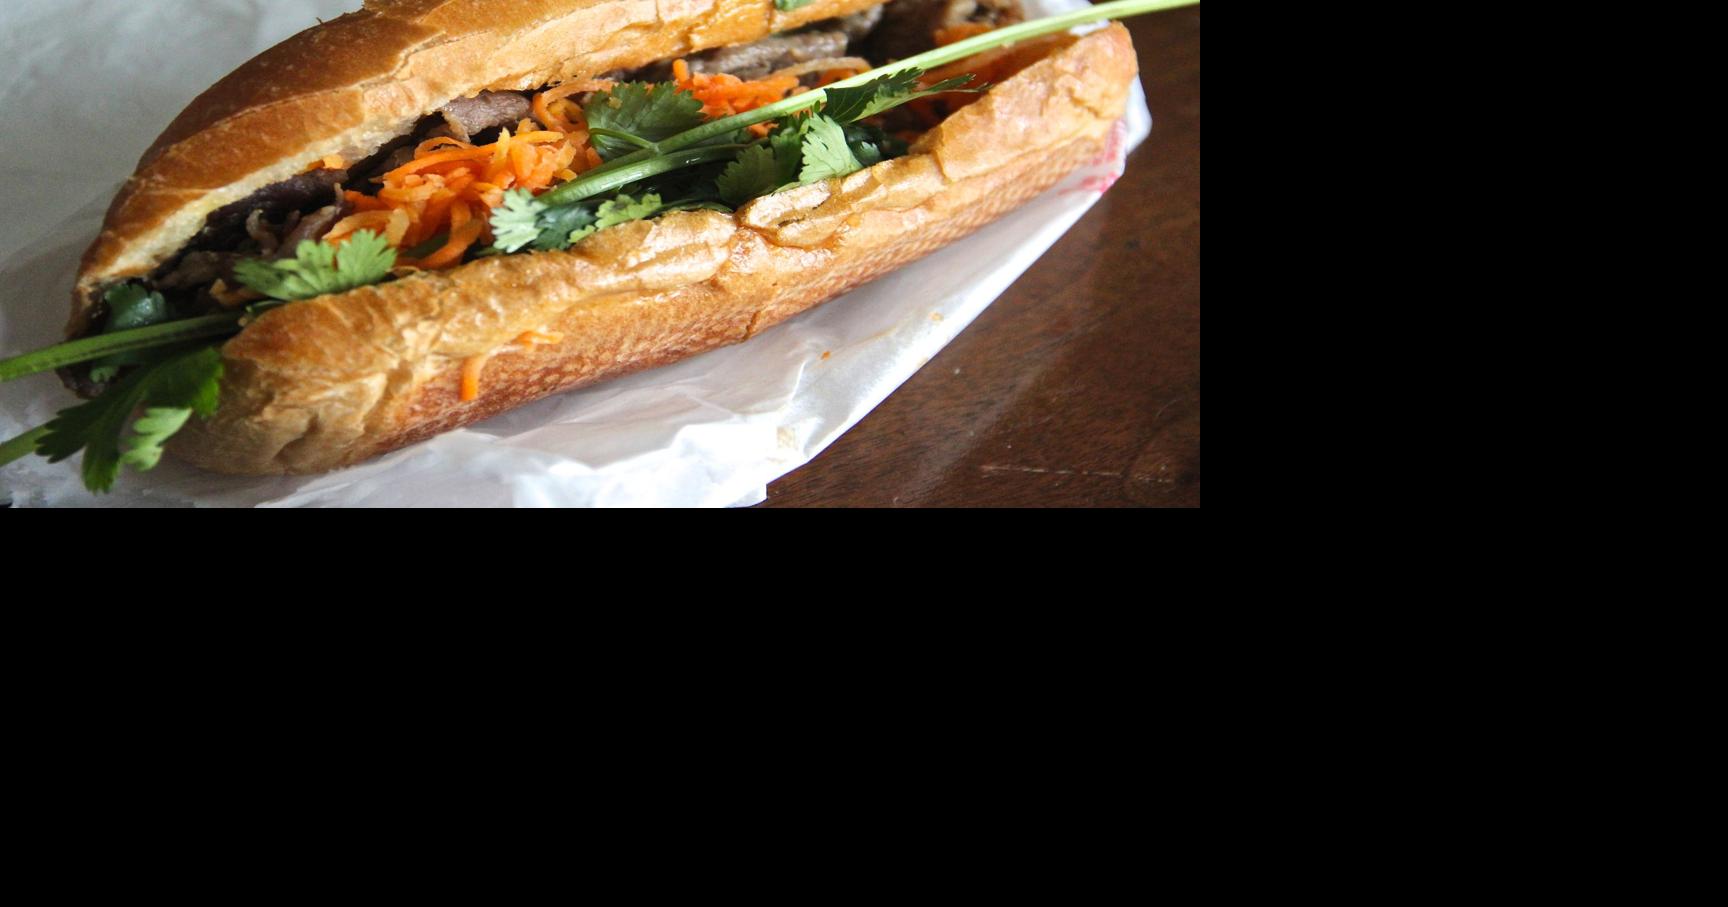 where can i get a banh mi sandwich near me